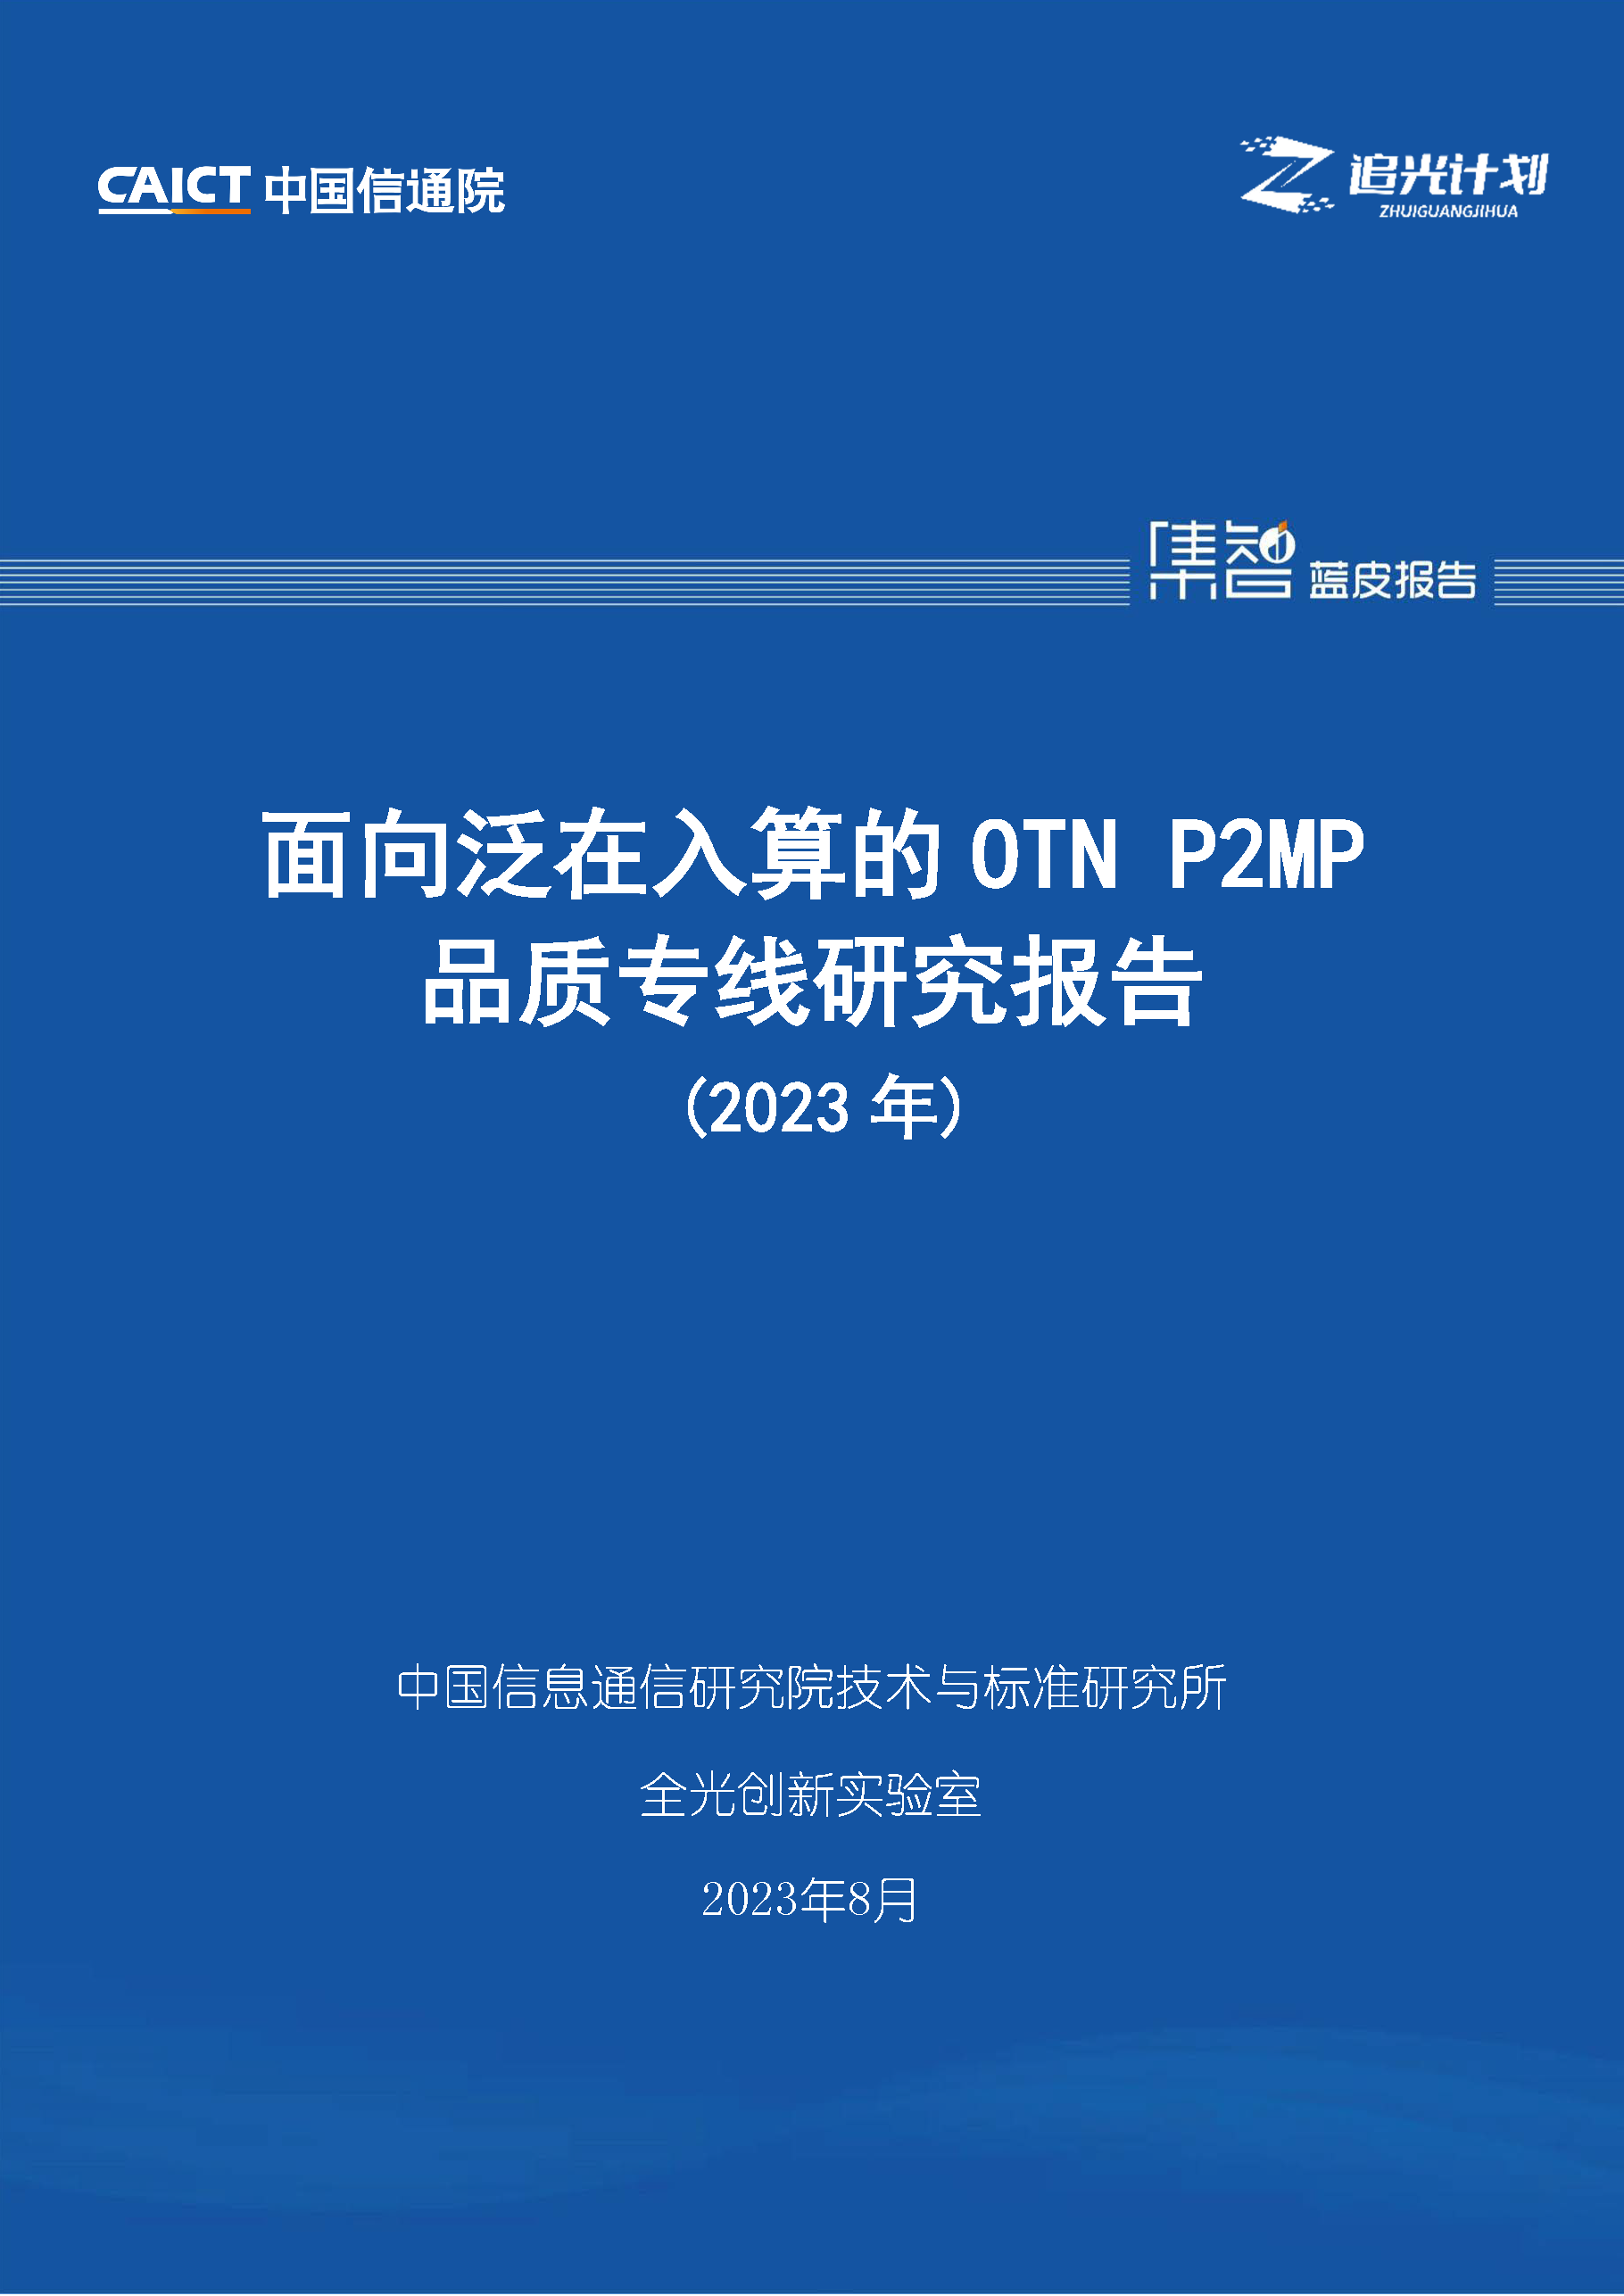 OTN P2MP专线：以全光运力支持泛在入算